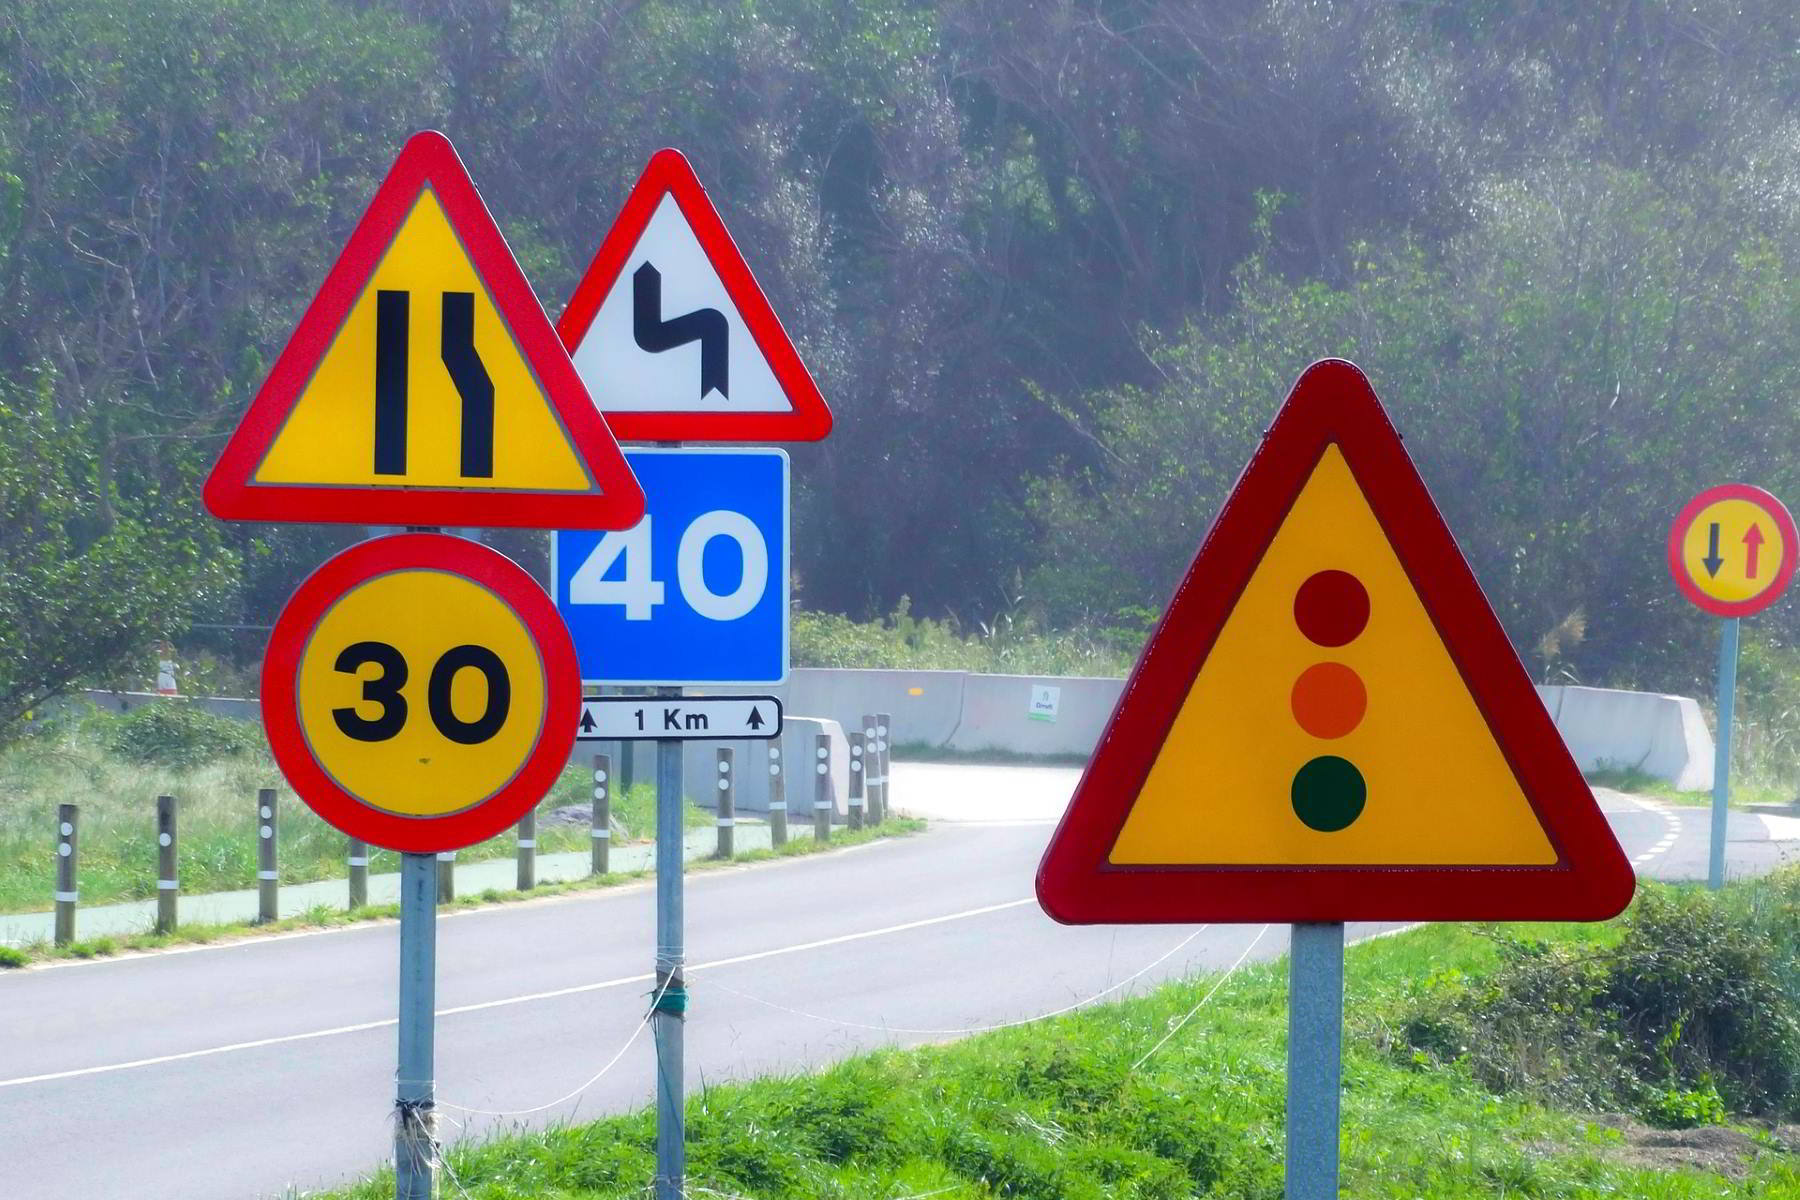 Señal de tráfico triangular: todo lo que debes saber